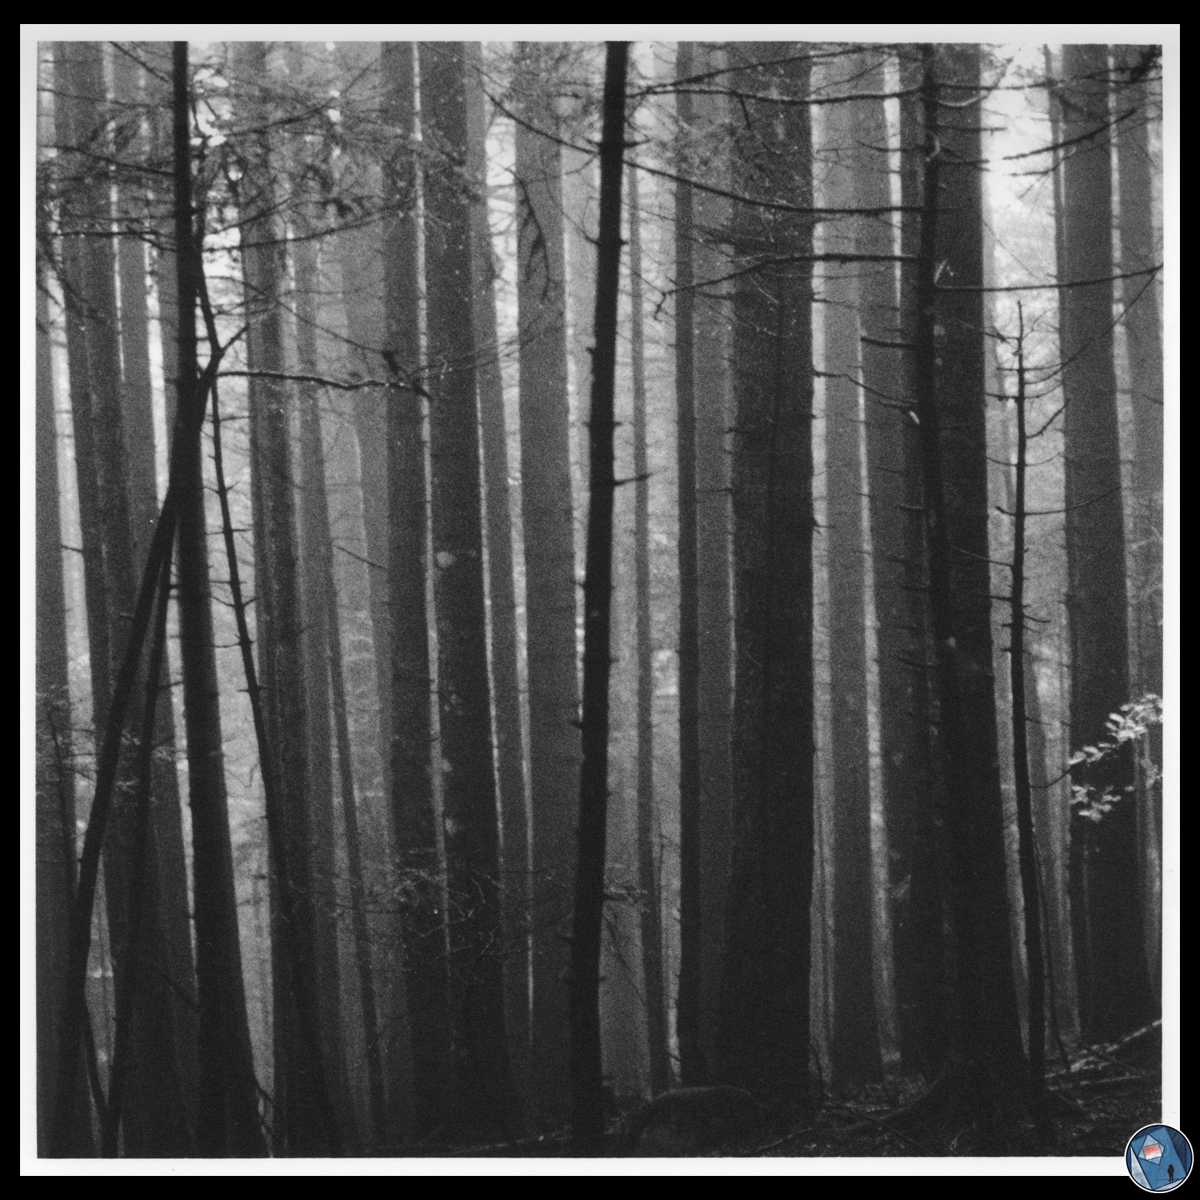 ___Harmles stuff___
+ Misty forest +
.
#filmphotography #35mmfilm 
📷 Pentax ME
🎞️ Ilford Pan 400 developed in #caffenol
.
#photography #landscapephotography #fineart #fineartphotography #believeinfilm #filmisnotdead #blackandwhite #bnw_captures